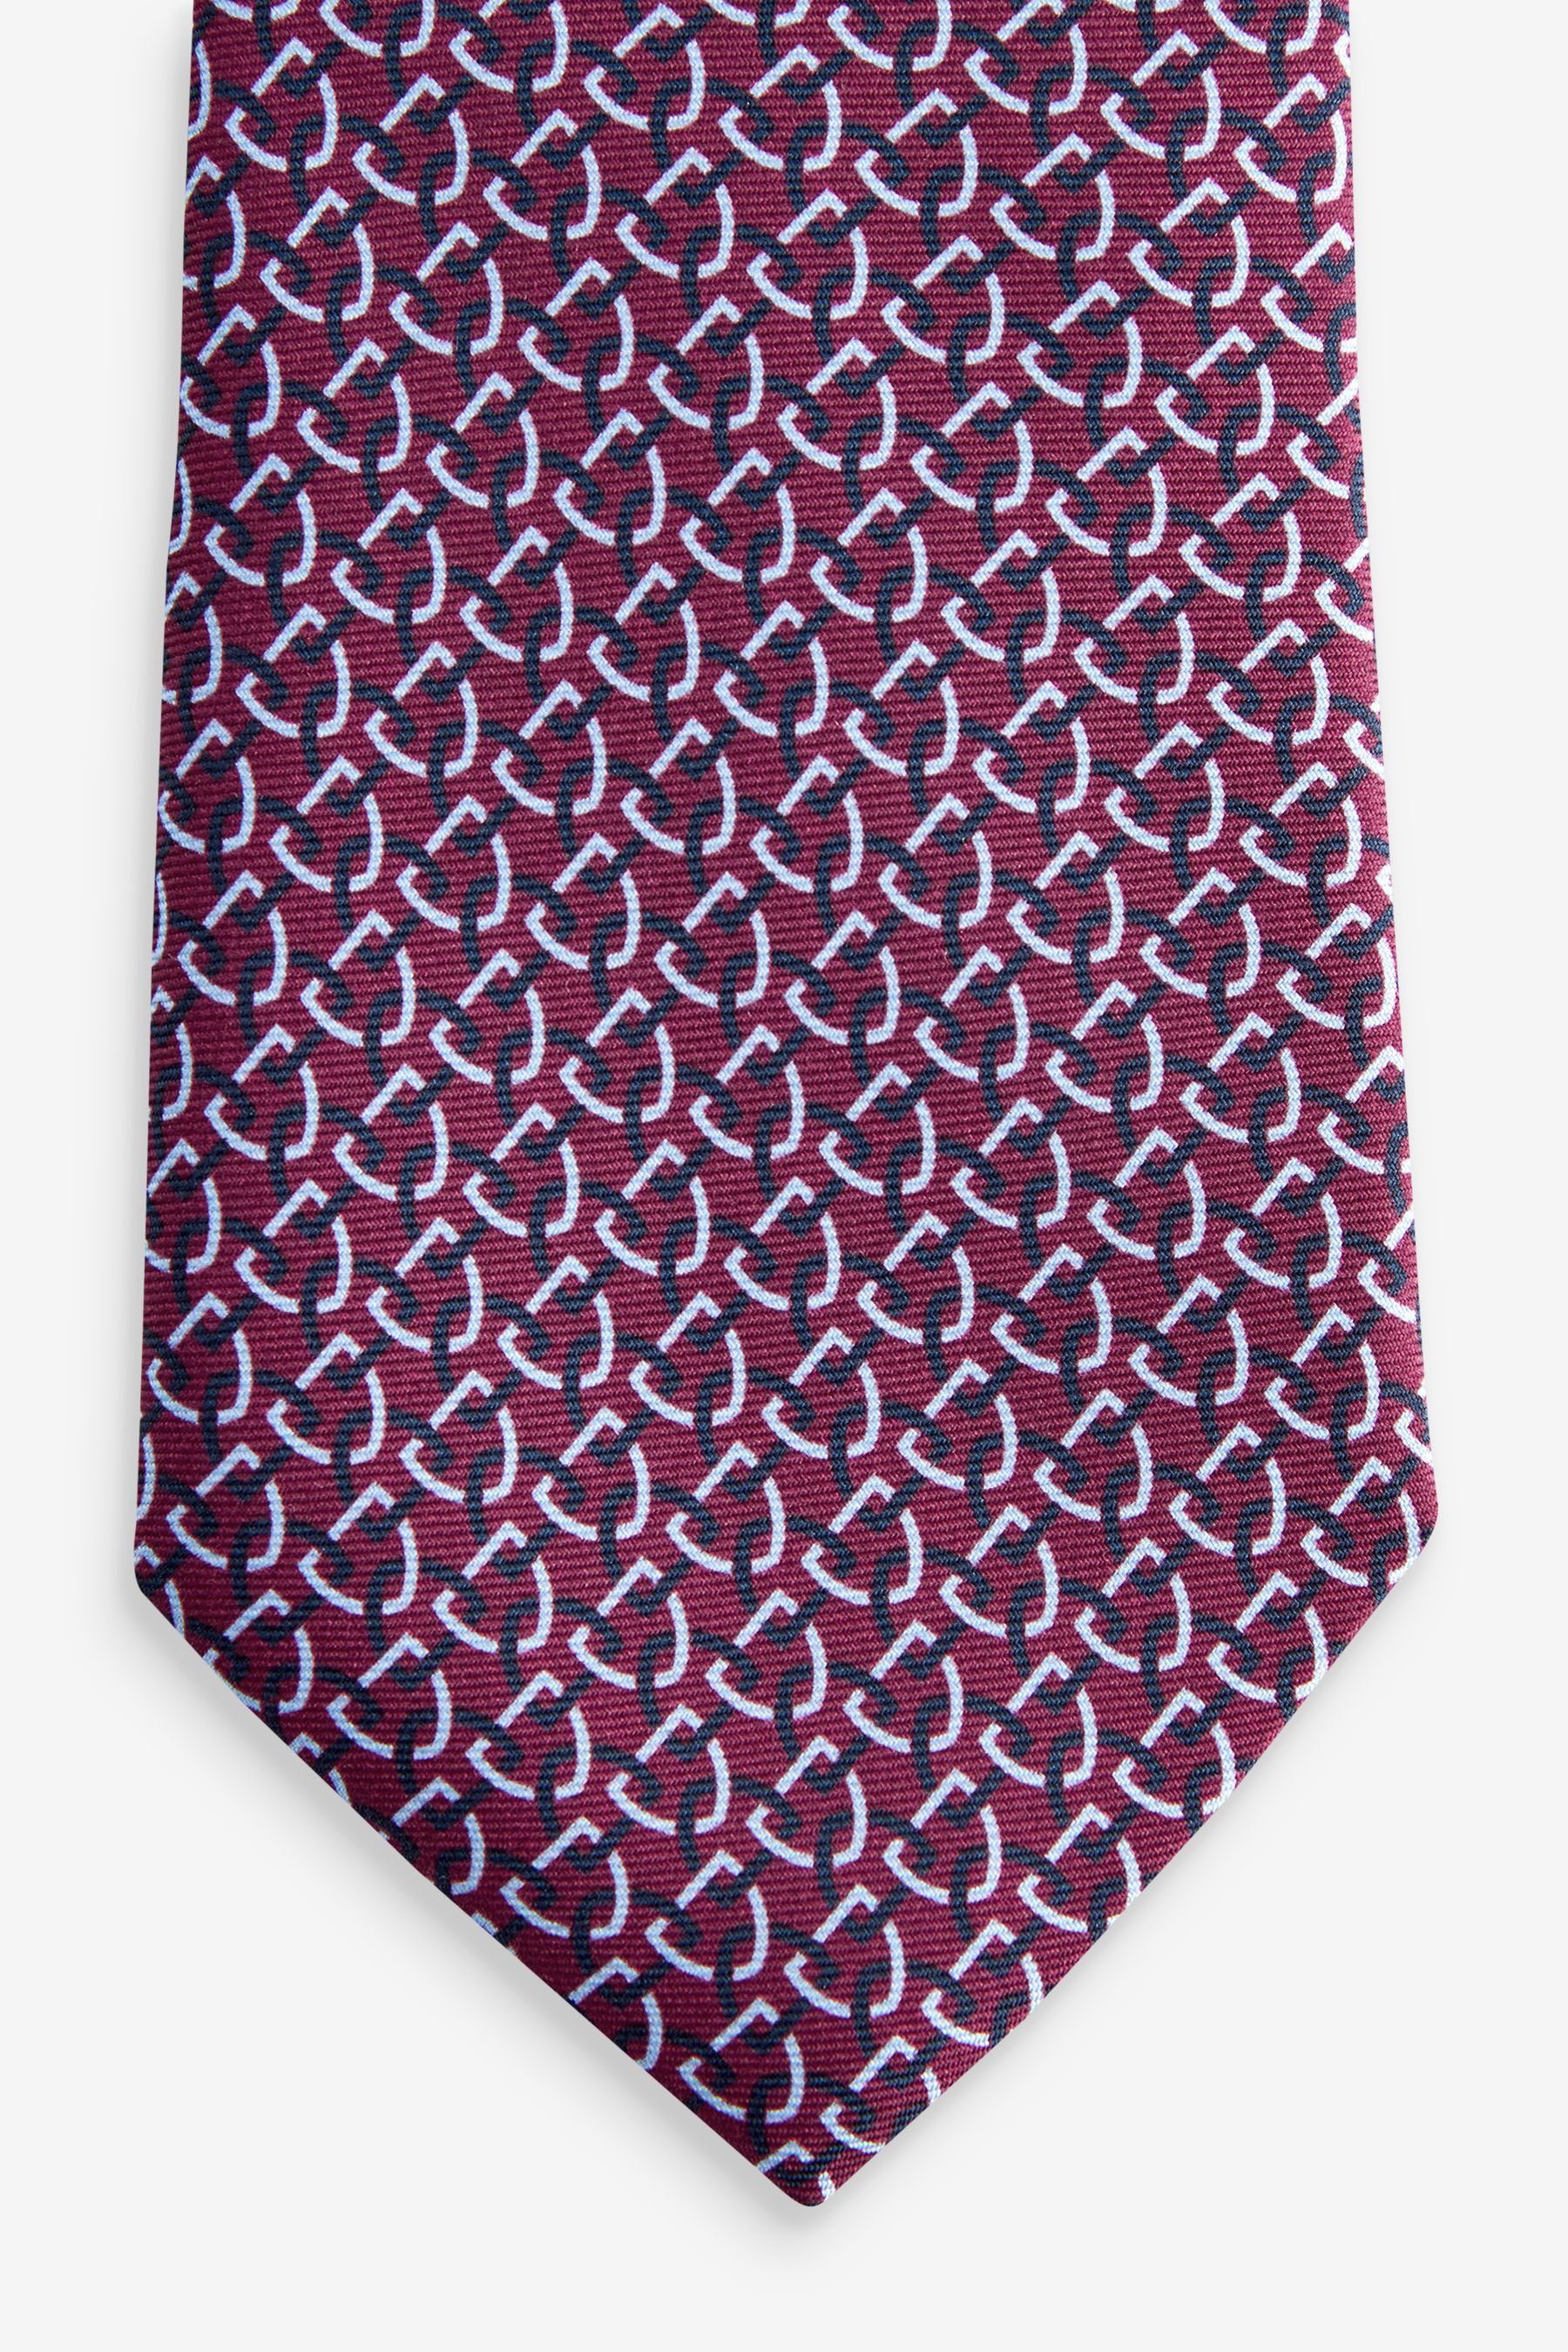 (1-St) hergestellt Signature-Krawatte, Italien in Krawatte Next Geometric Red